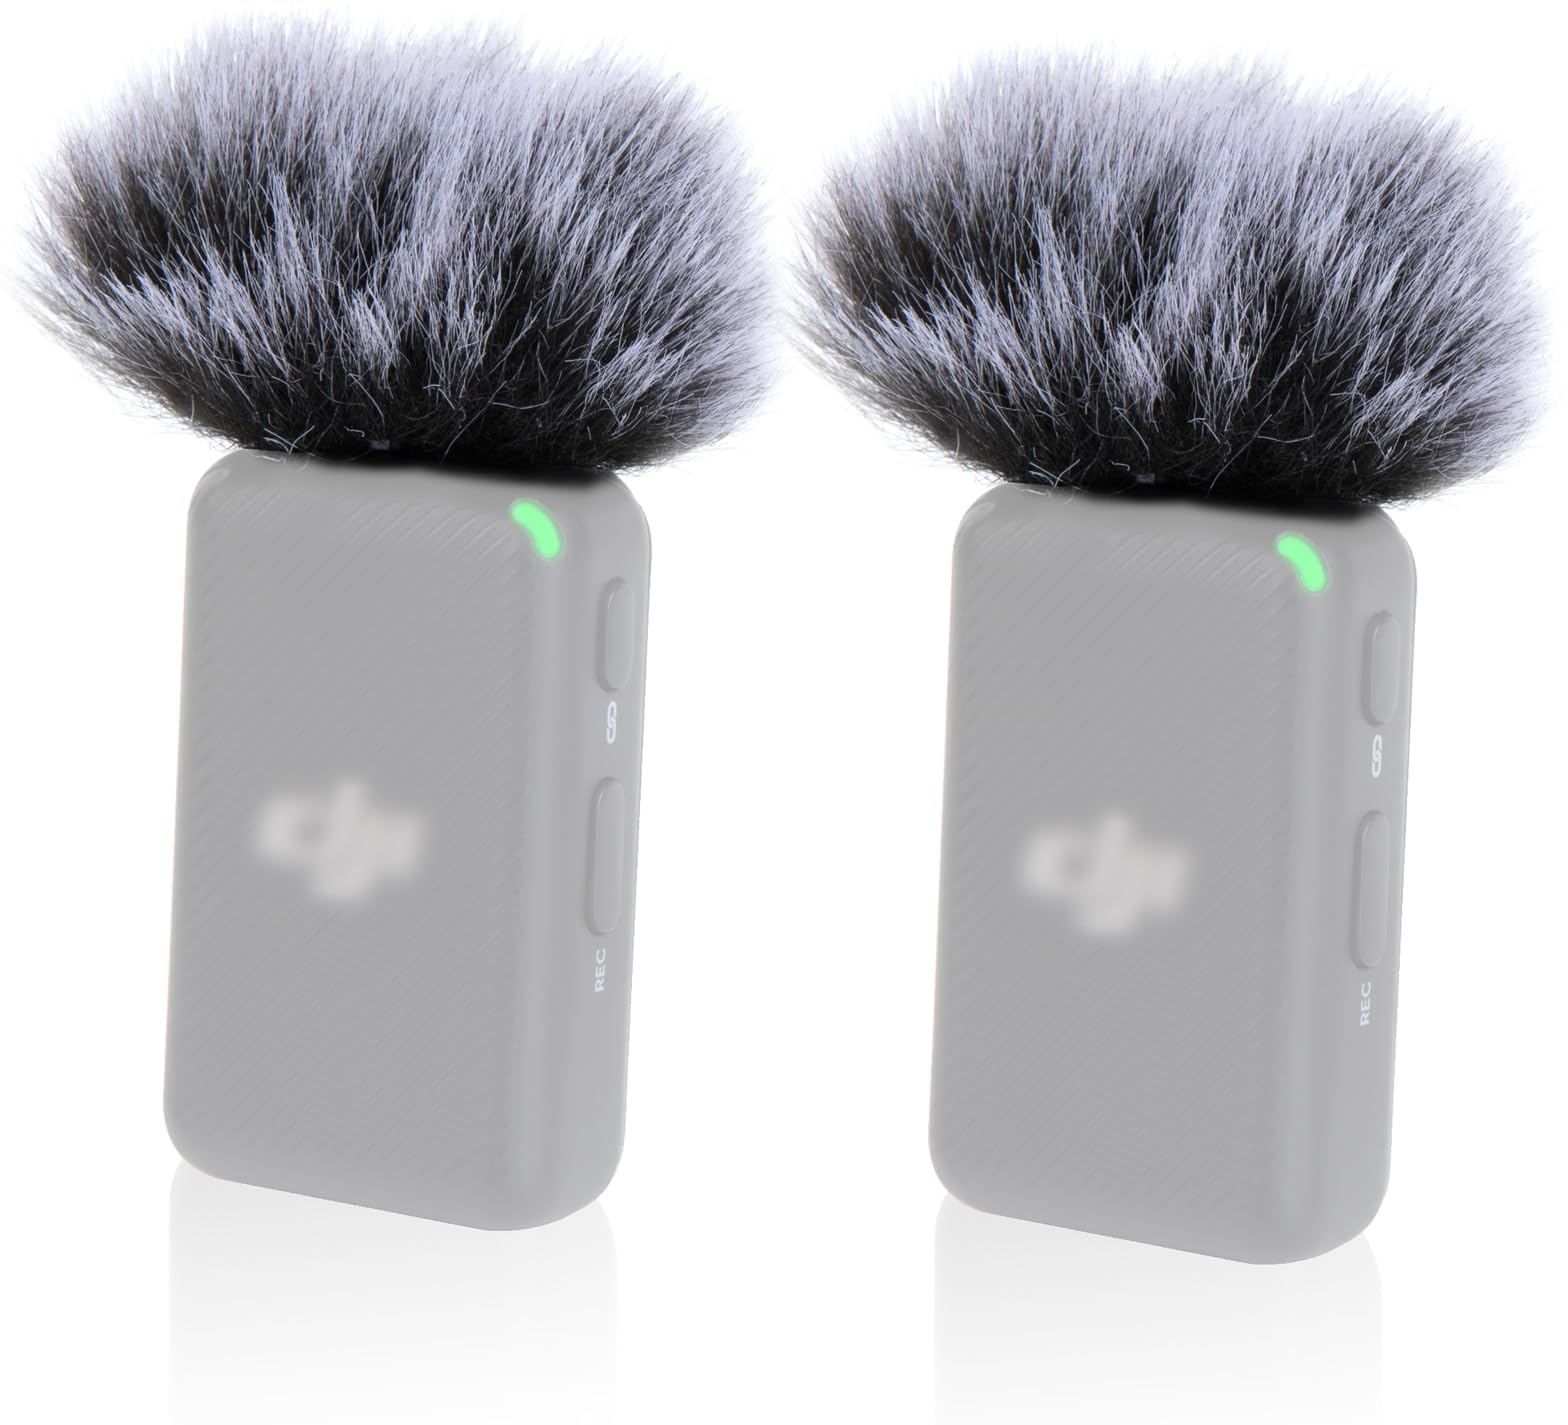 YOUSHARES Mikrofon Windschutz für DJI Mic, 2 PCS Fell Wind Muff Pop Filter kompatibel mit DJI Mic, Professionelle Außen Windfilter Schallschutz (2 Stück)